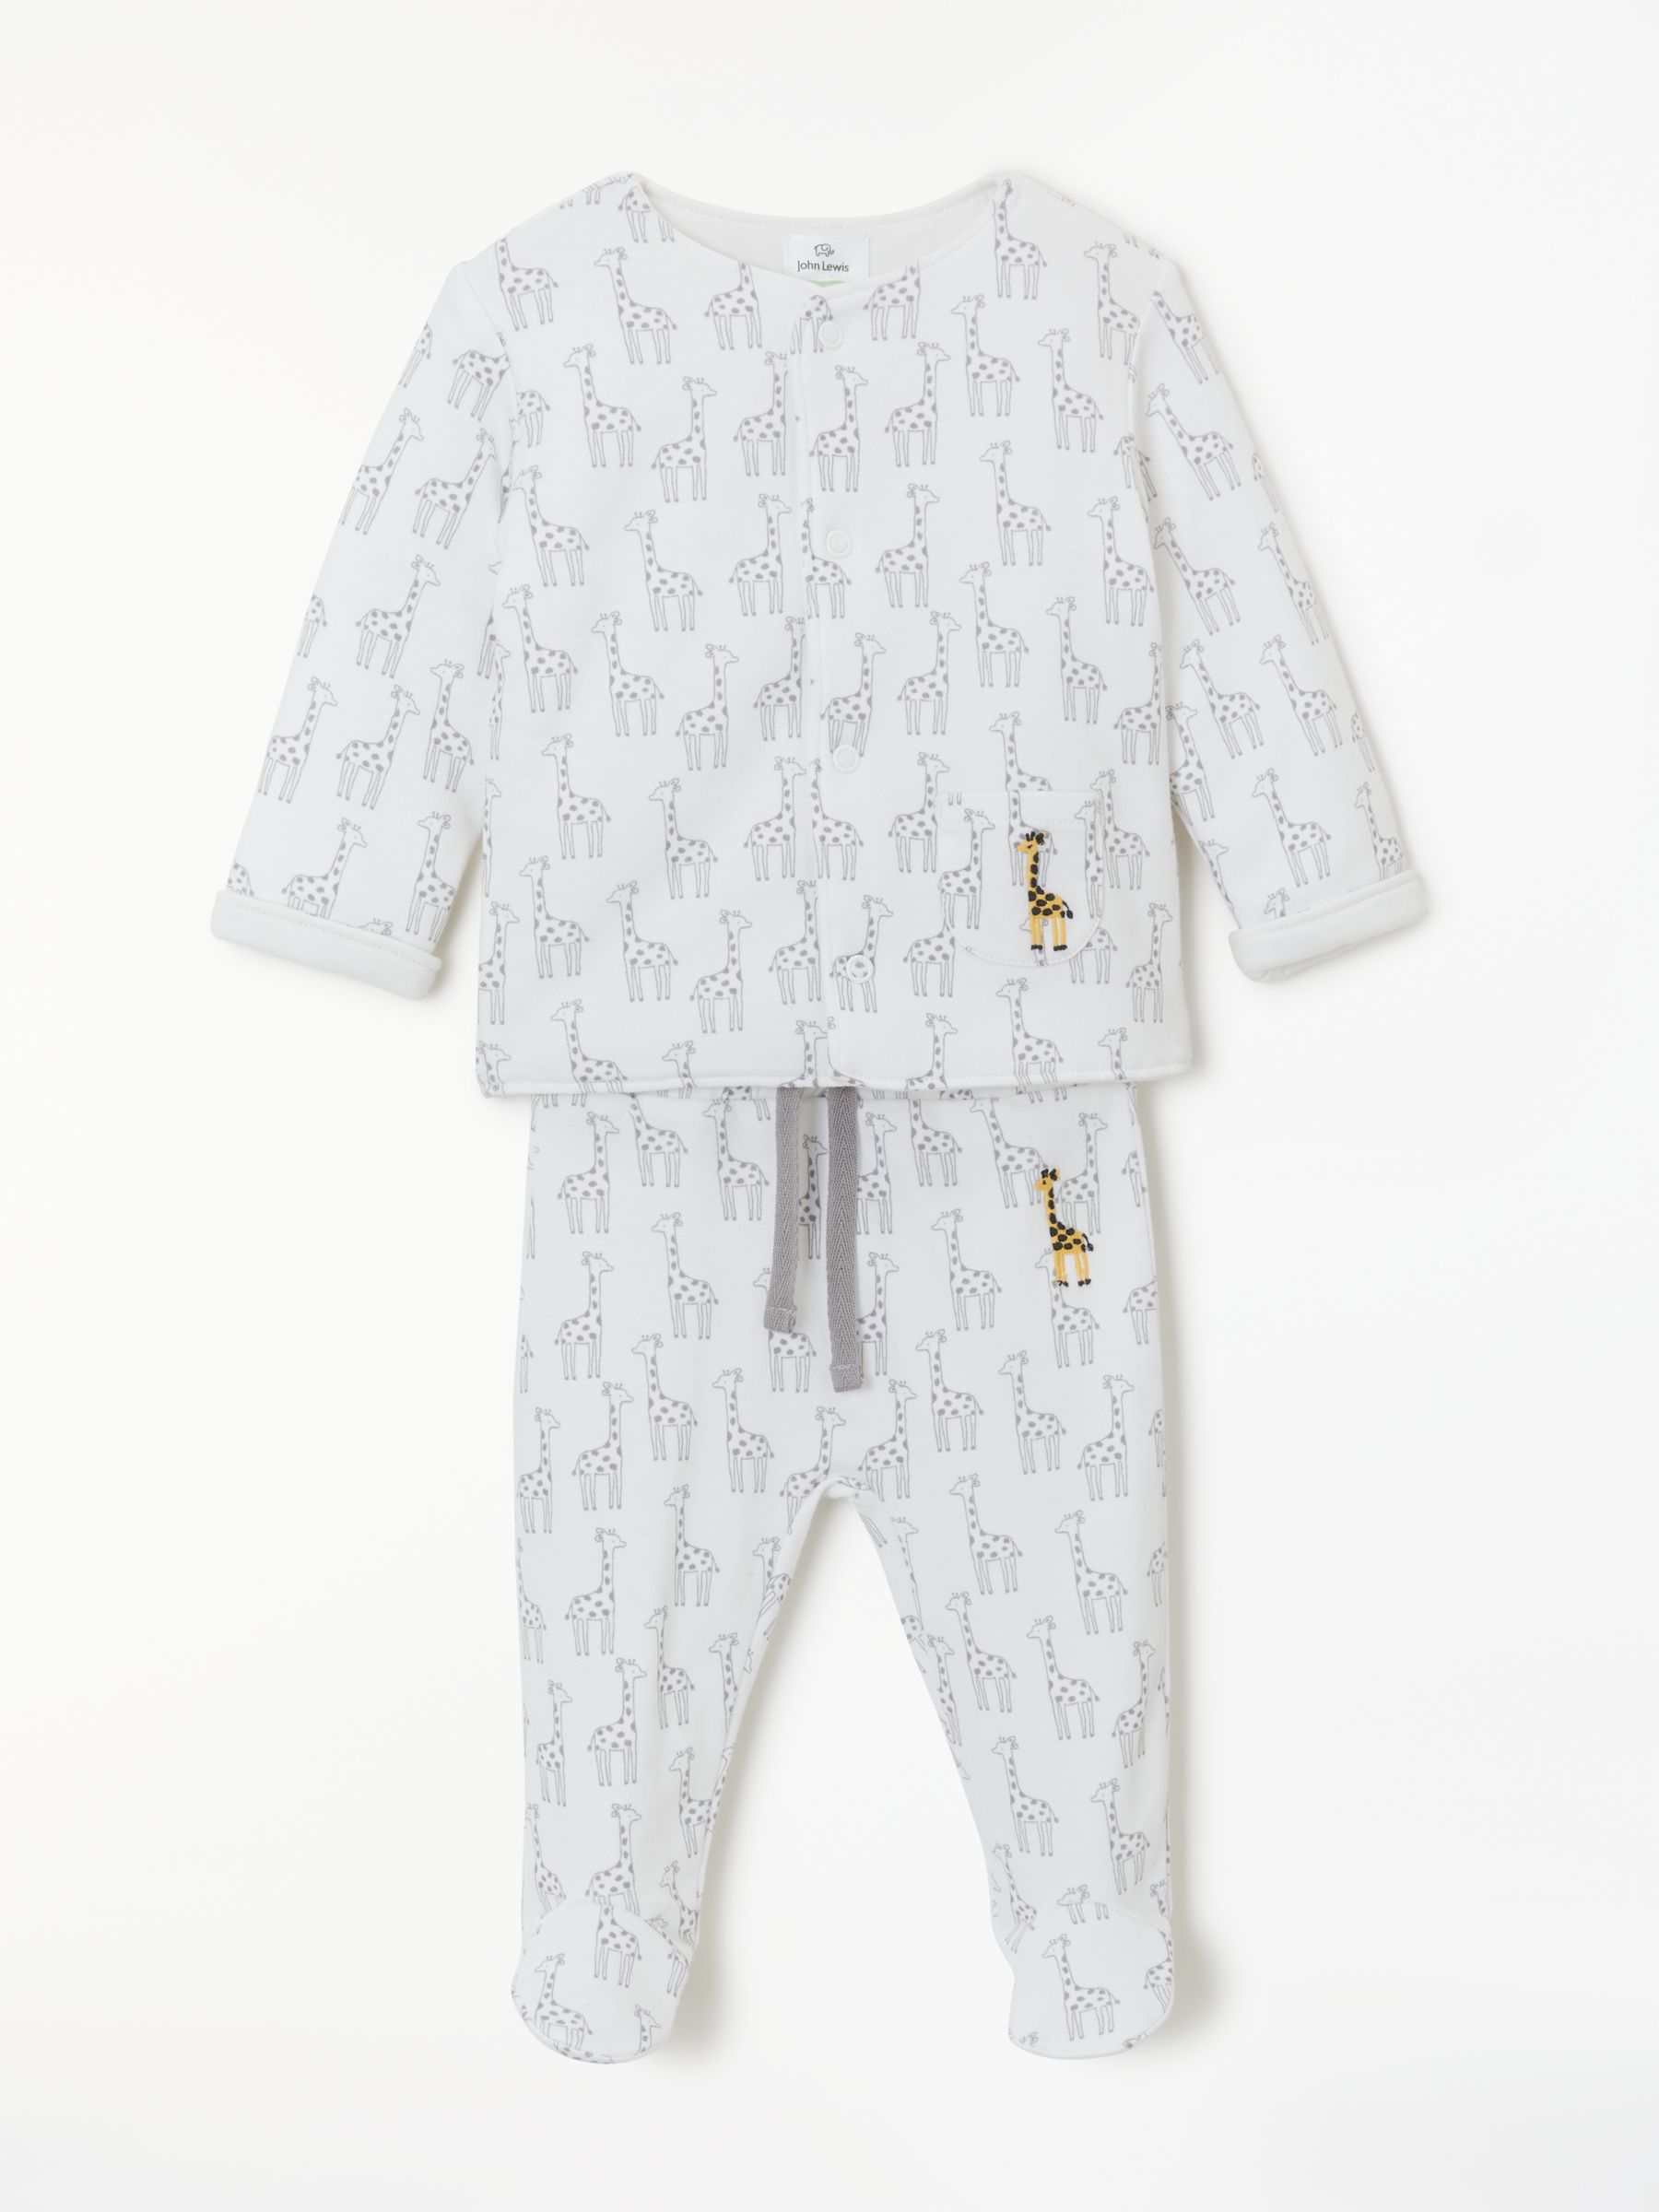 John Lewis & Partners Baby GOTS Organic Cotton Giraffe Wadded Jacket & Leggings Set, White/Grey